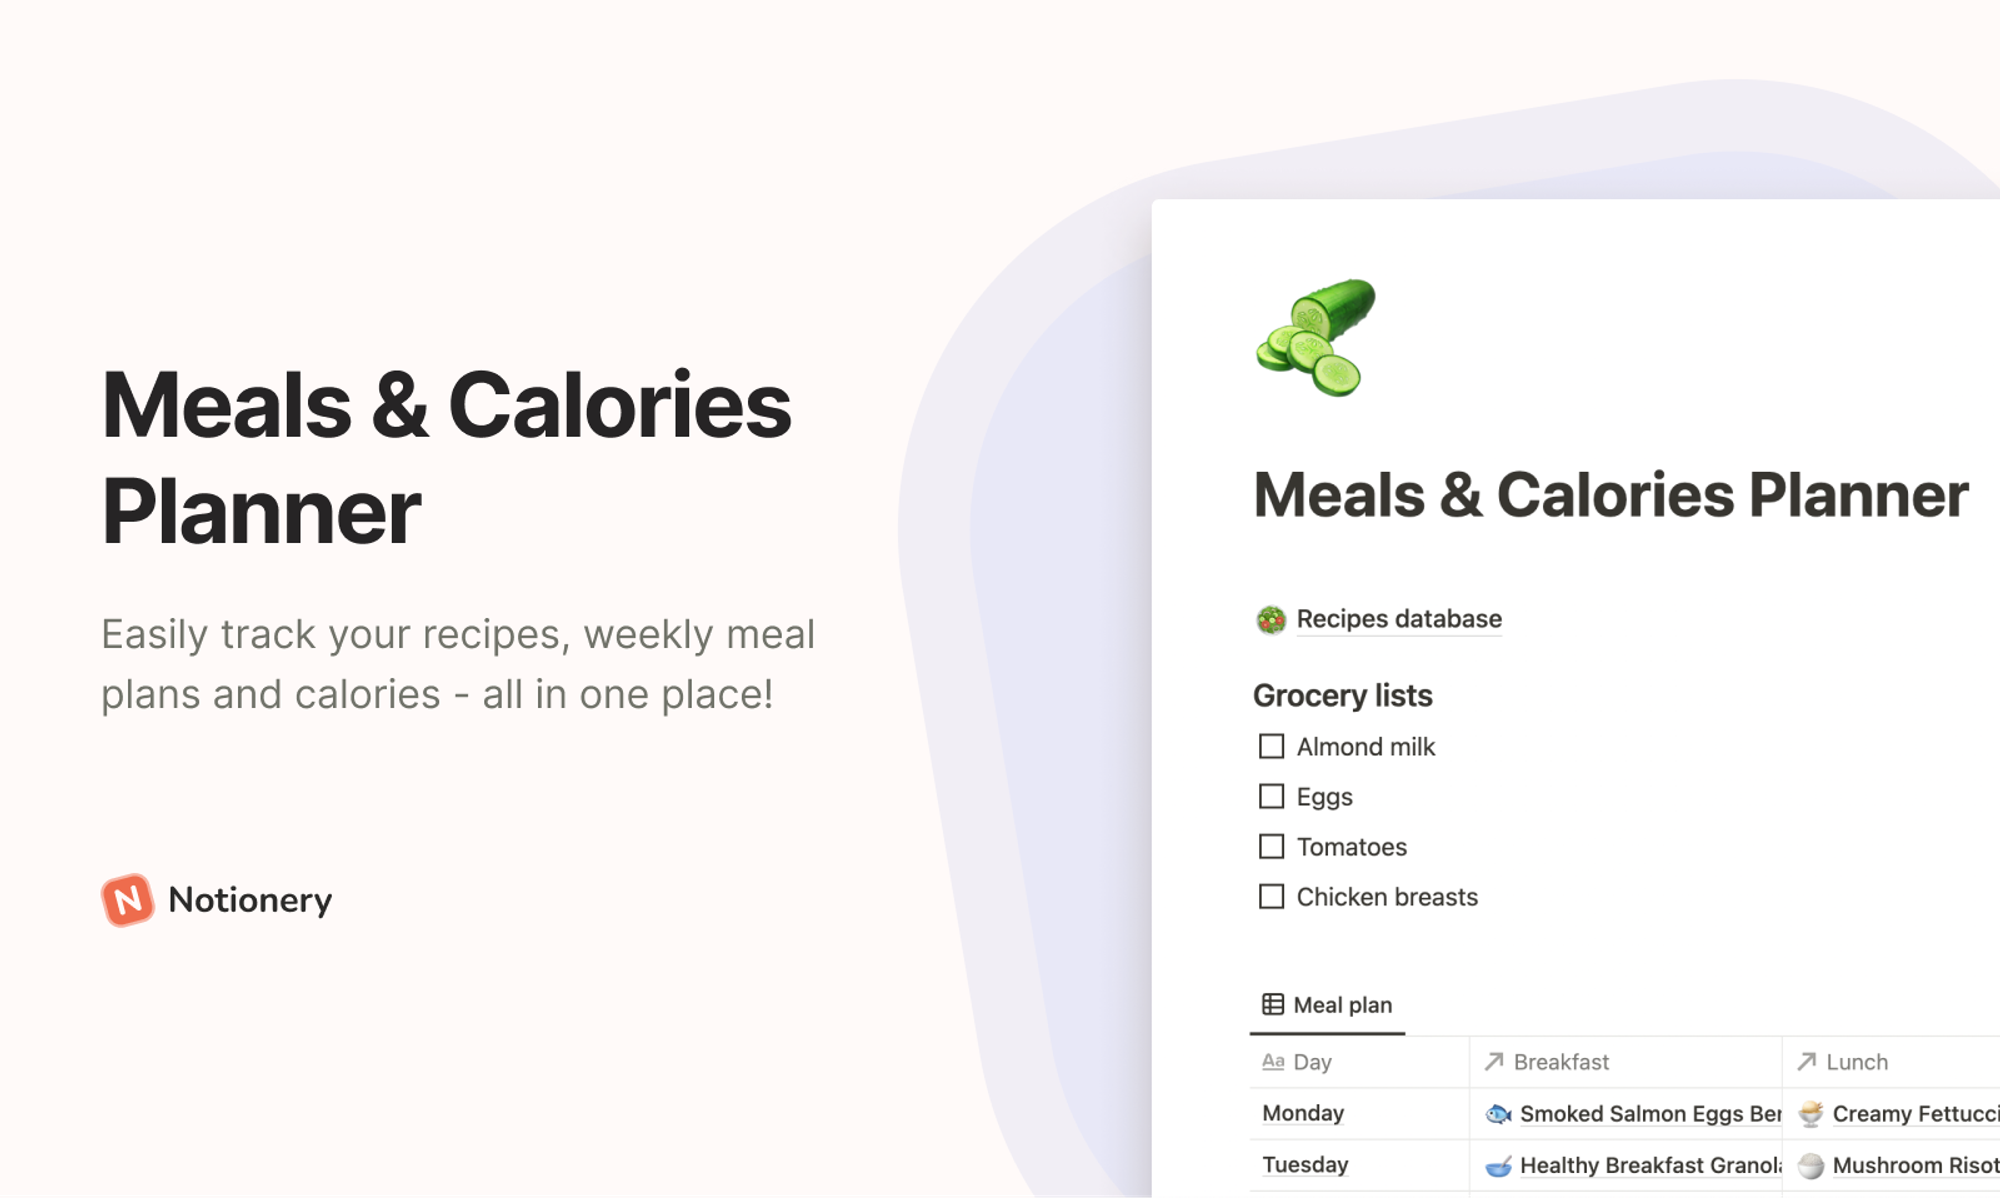 Meals & Calories Planner